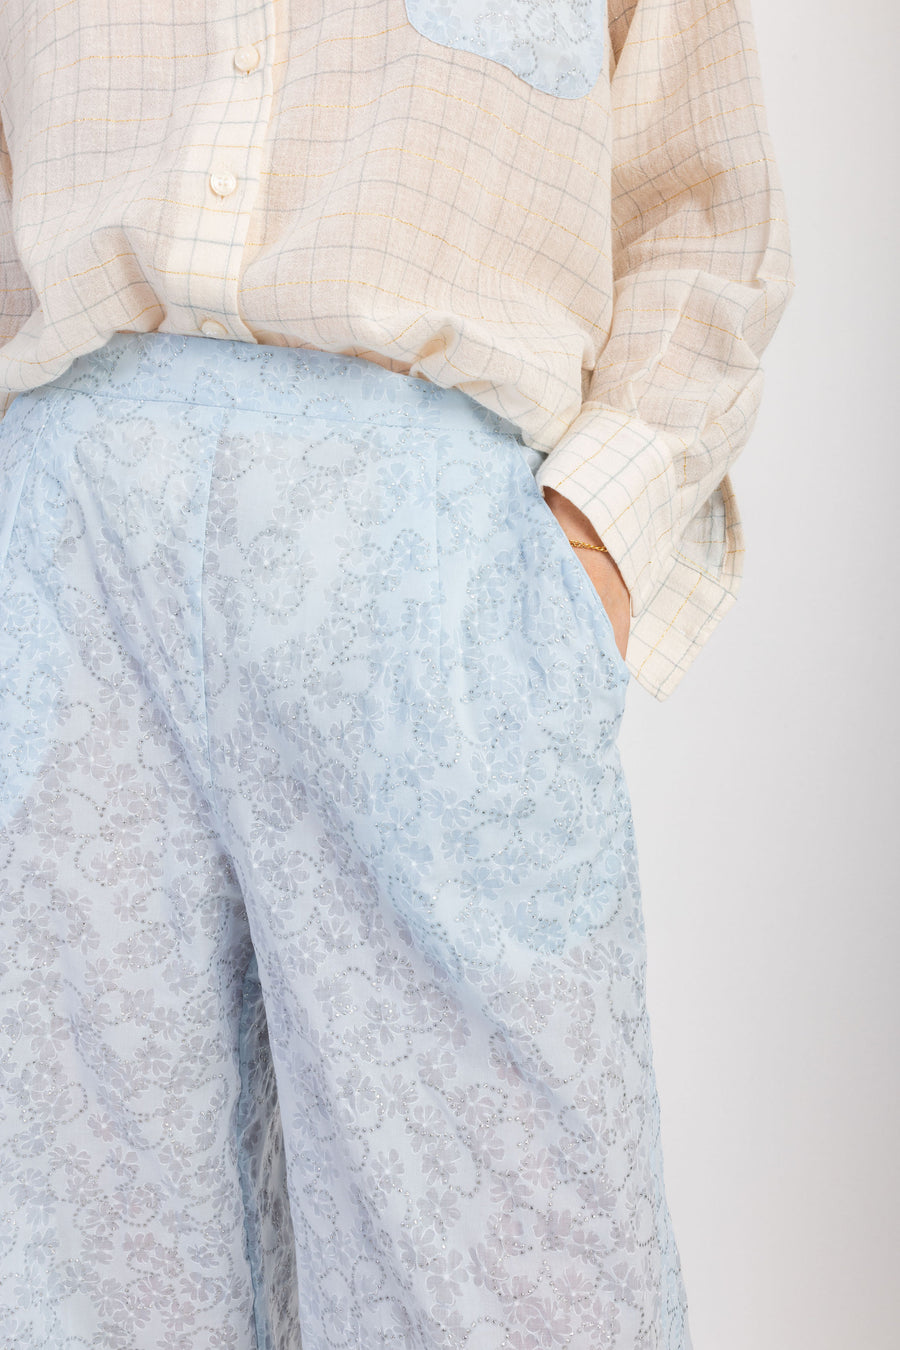 Gap Body SMALL white pajama pj long pants 100% all cotton flower long LOW  RISE